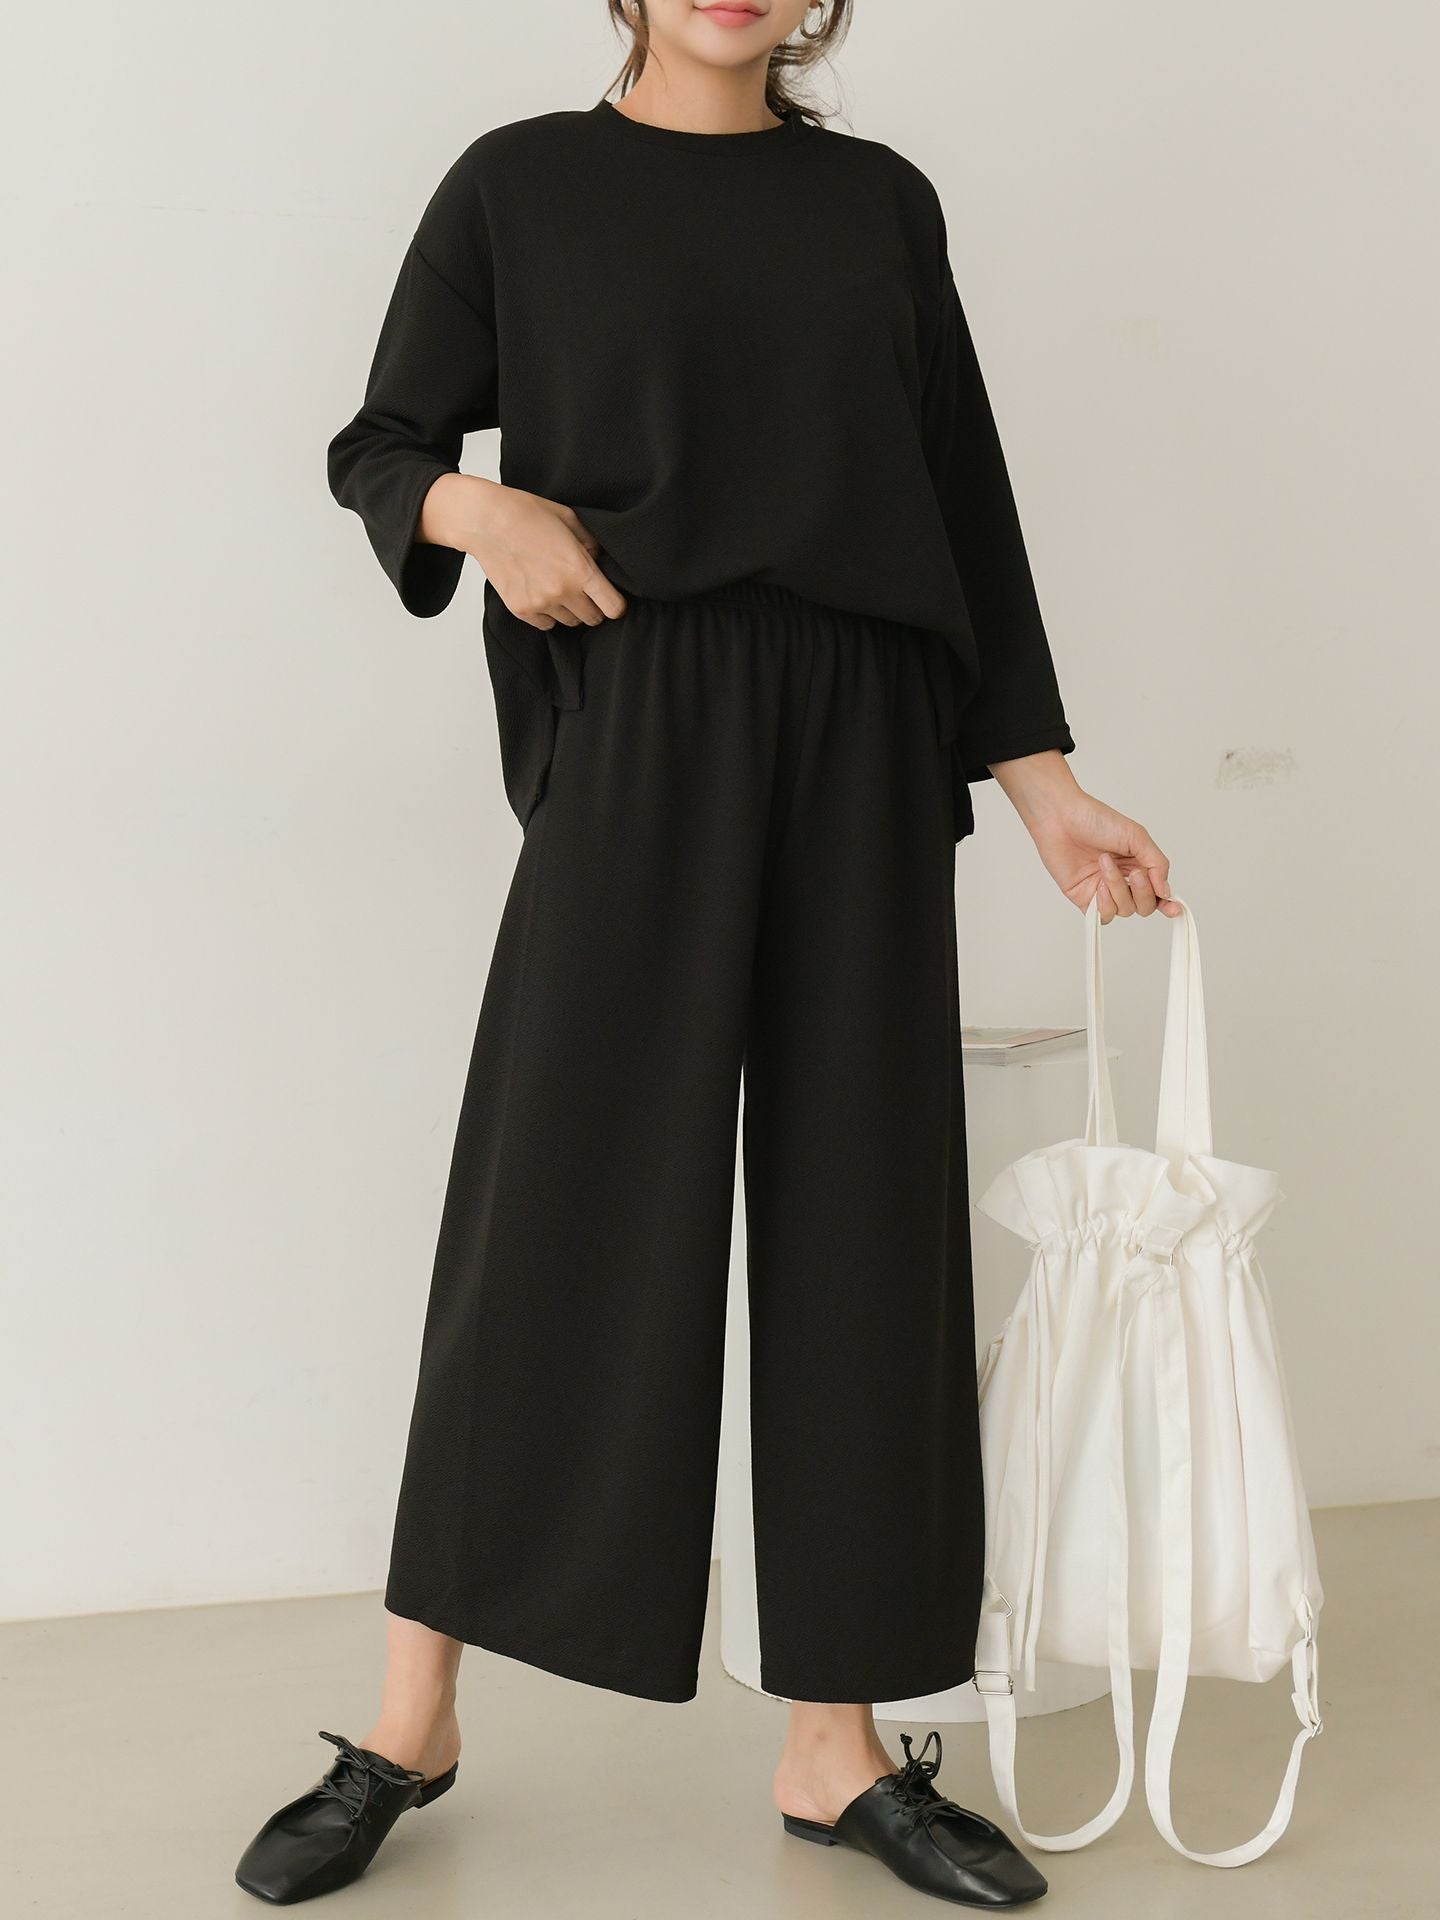 4 COLORS / 2pc-Set Soft Loungewear Gray Black Red Purple Long Sleeve Casual Wear Top Bottom Pajama Set / RENA / One Size